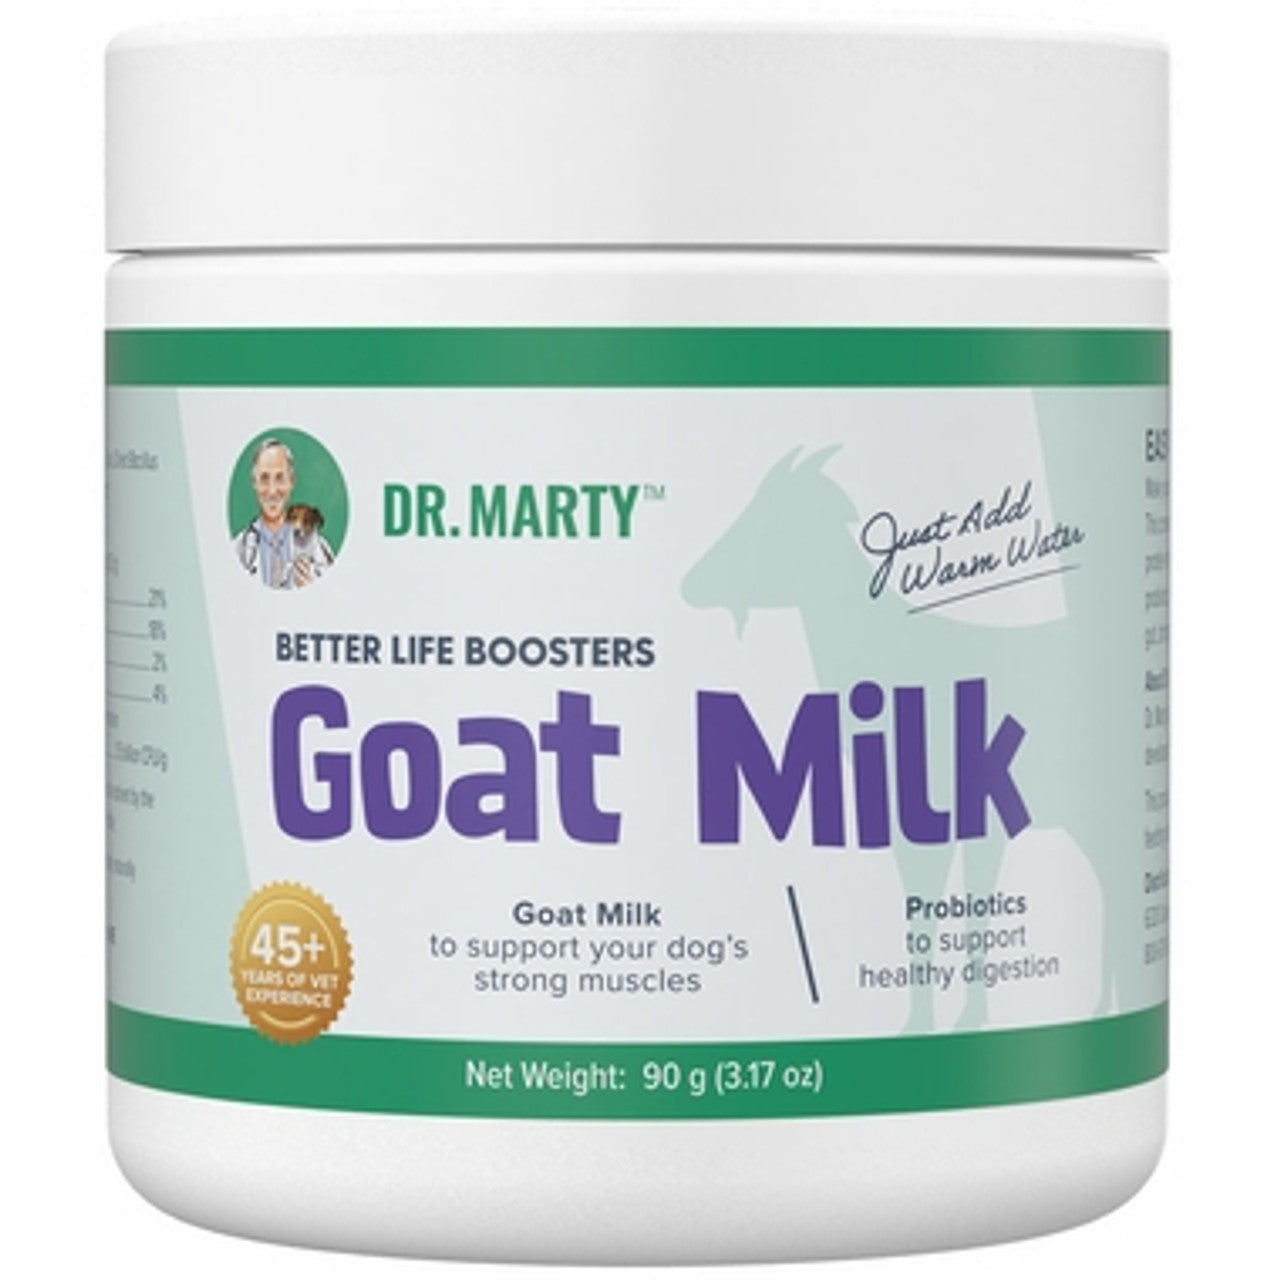 Solutions Pet Products Frozen Raw Goat Milk GOATnog On Sale At NJ Pet Store